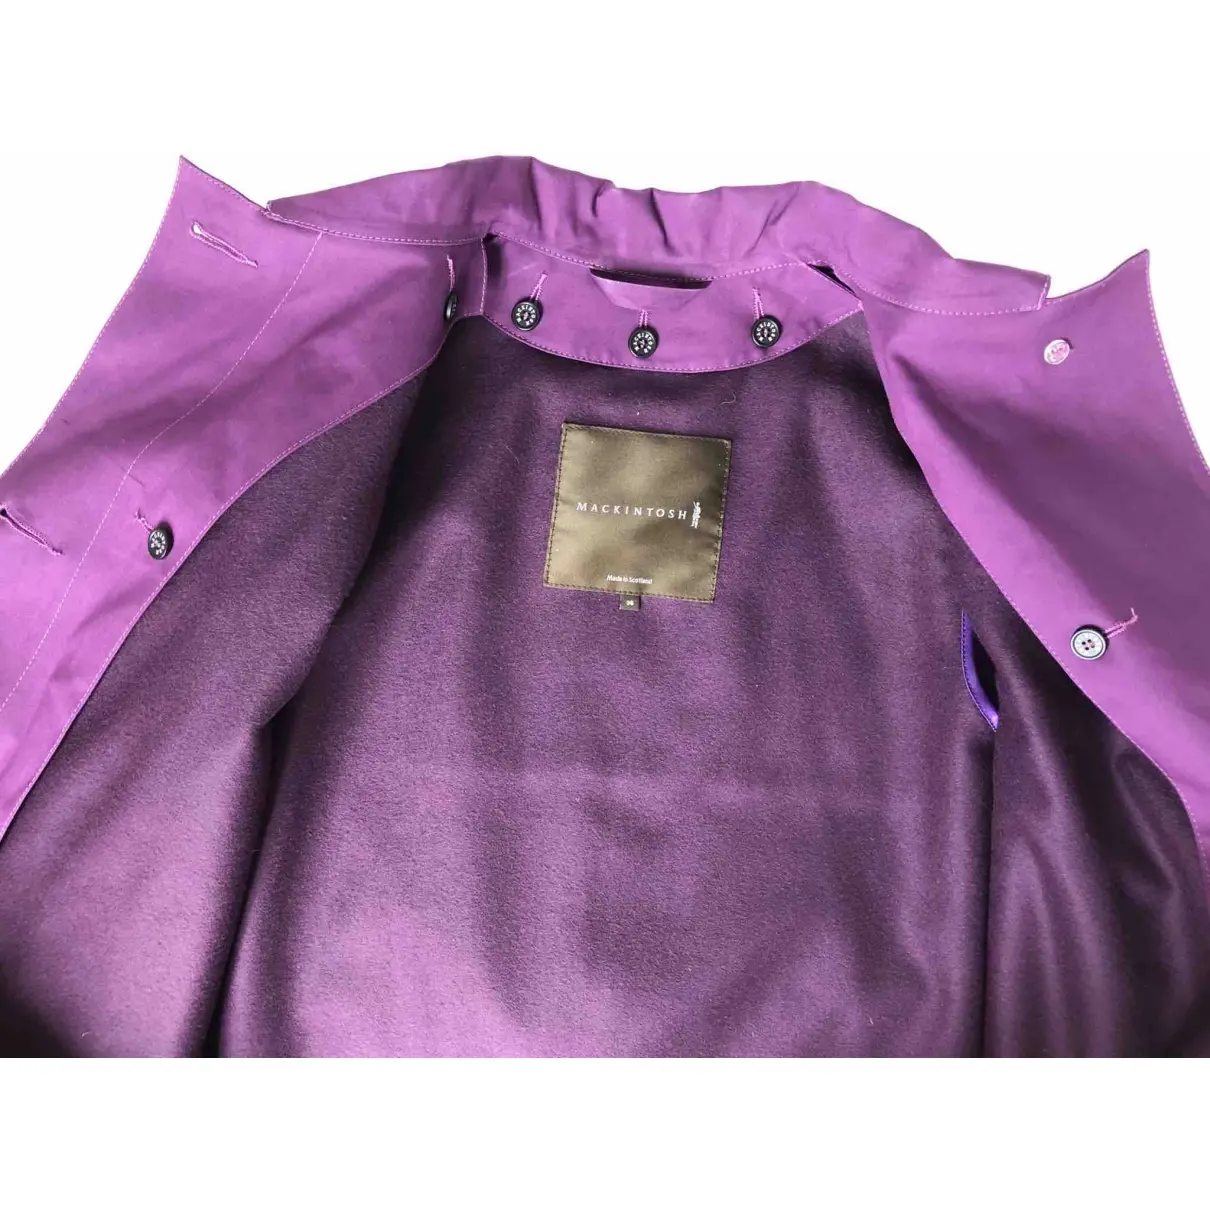 Buy Mackintosh Trench coat online